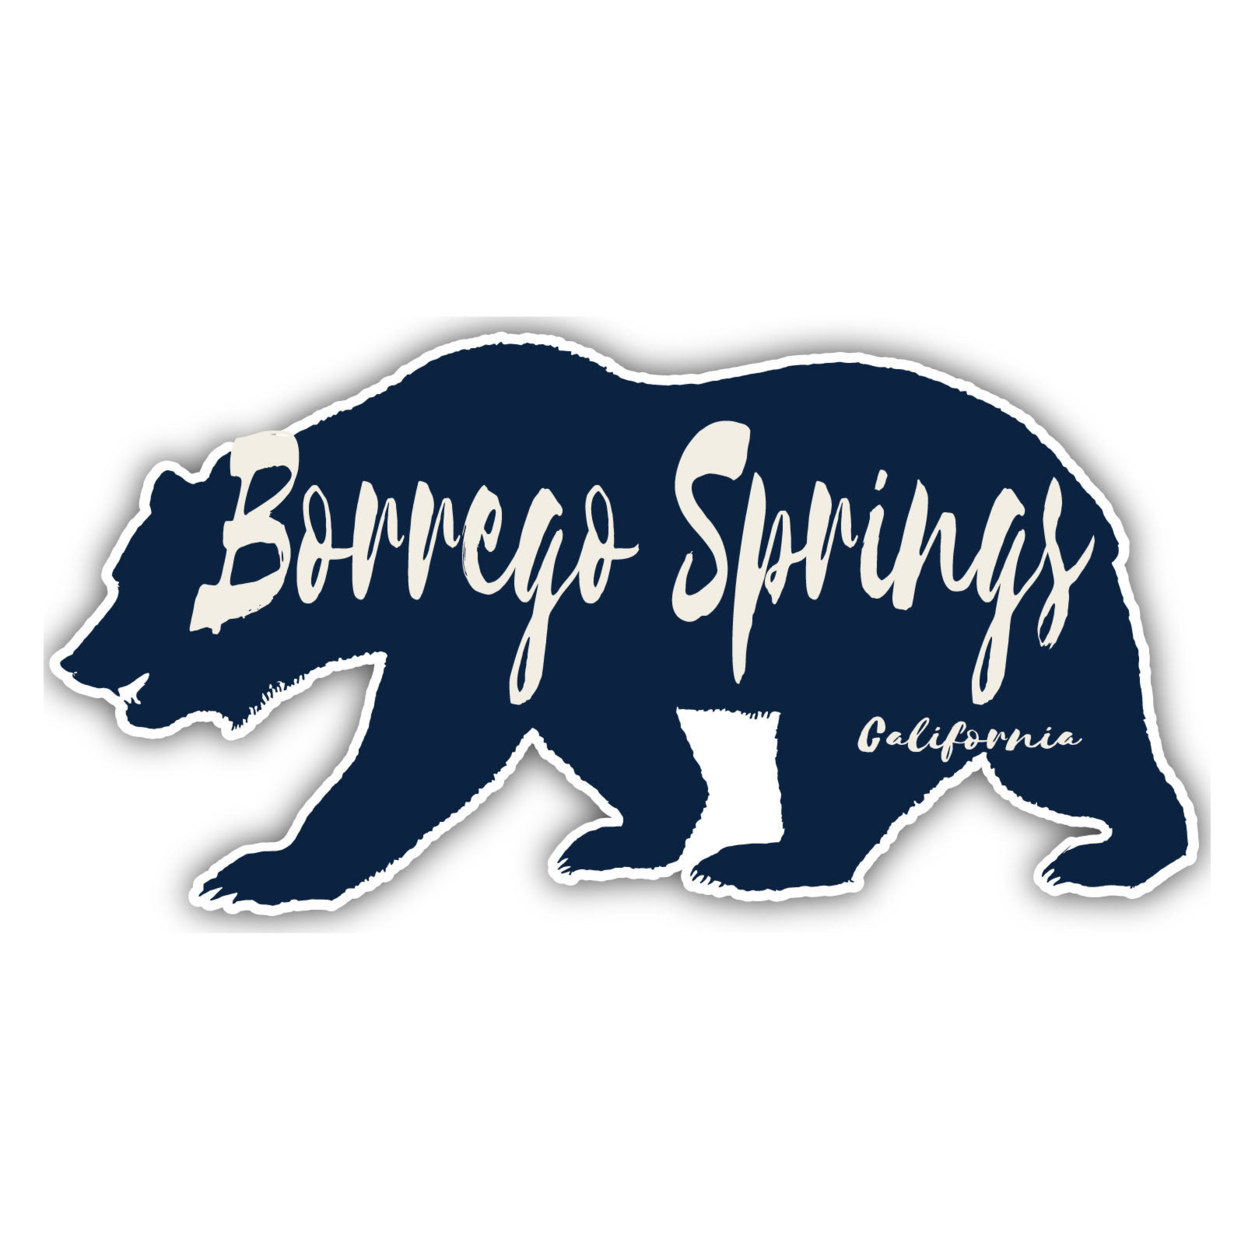 Borrego Springs California Souvenir Decorative Stickers (Choose Theme And Size) - Single Unit, 12-Inch, Bear